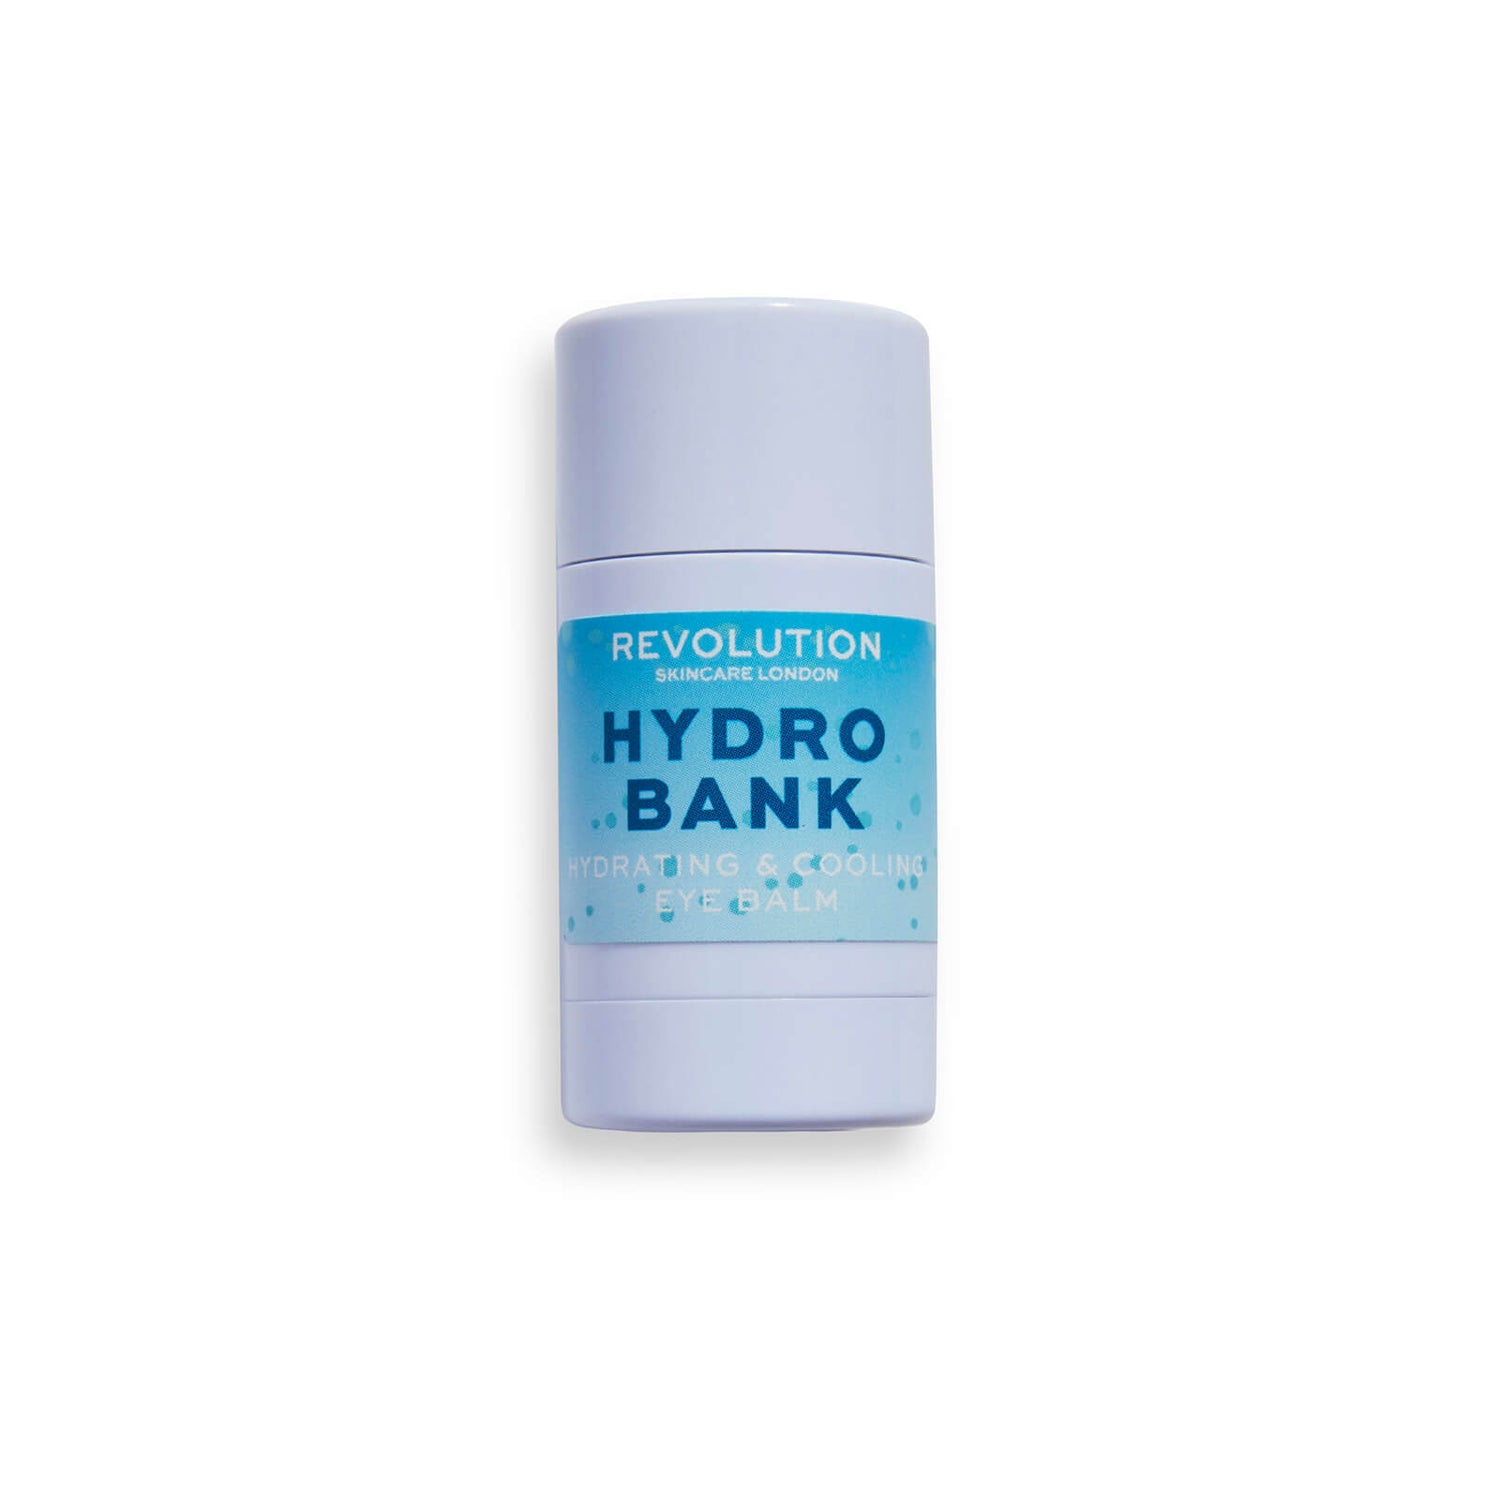 Hydro Bank Hydrating & Cooling Eye Balm